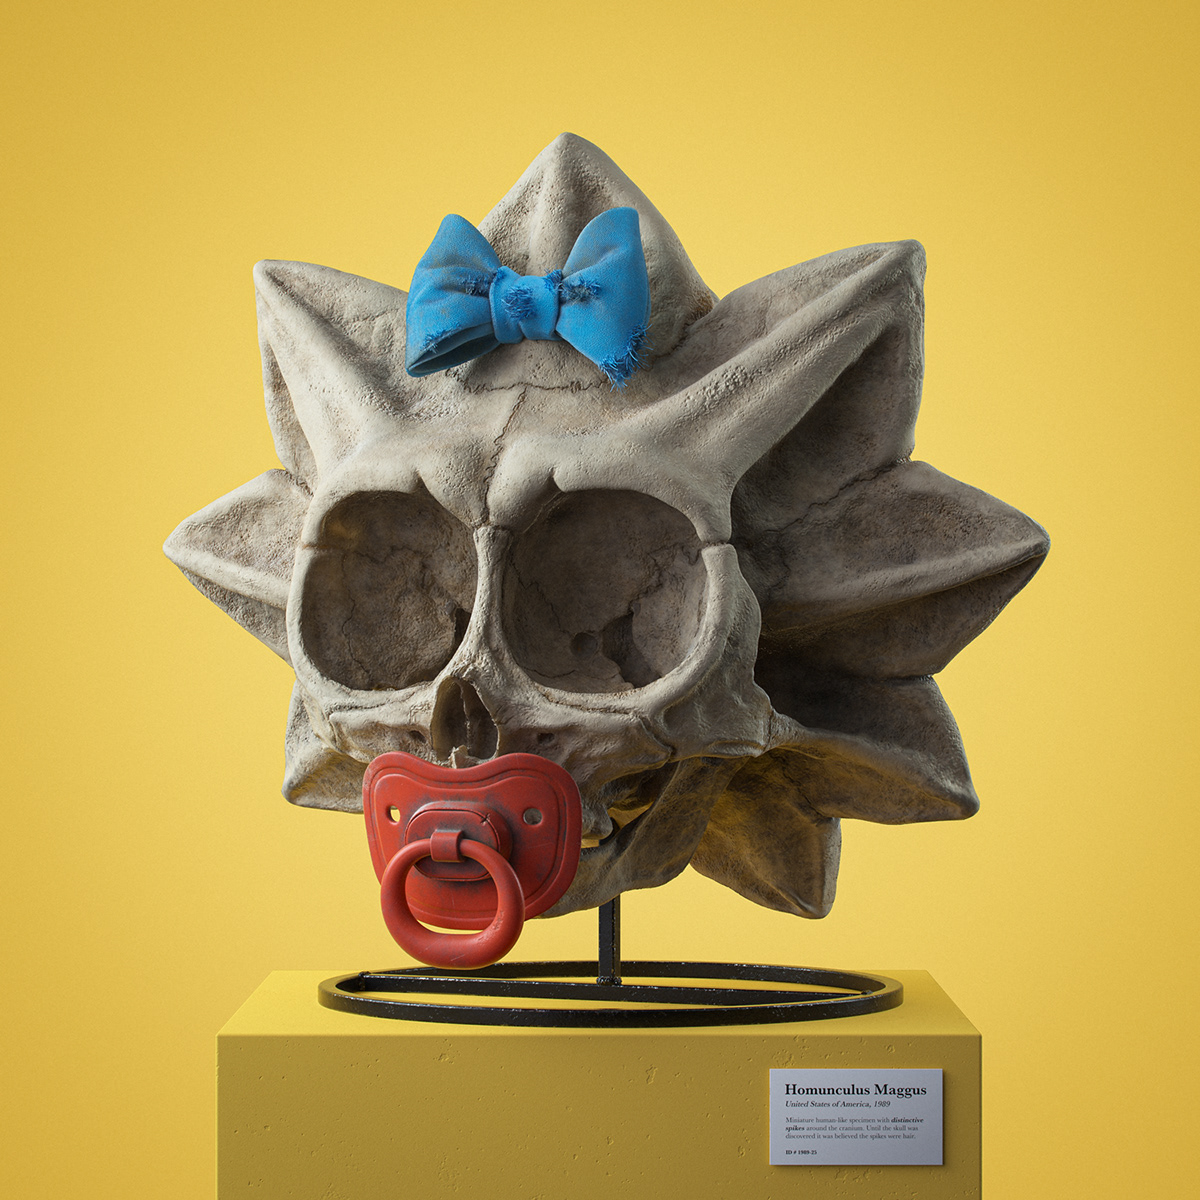 3D anatomy bones cartoon fossils pop culture Render skull